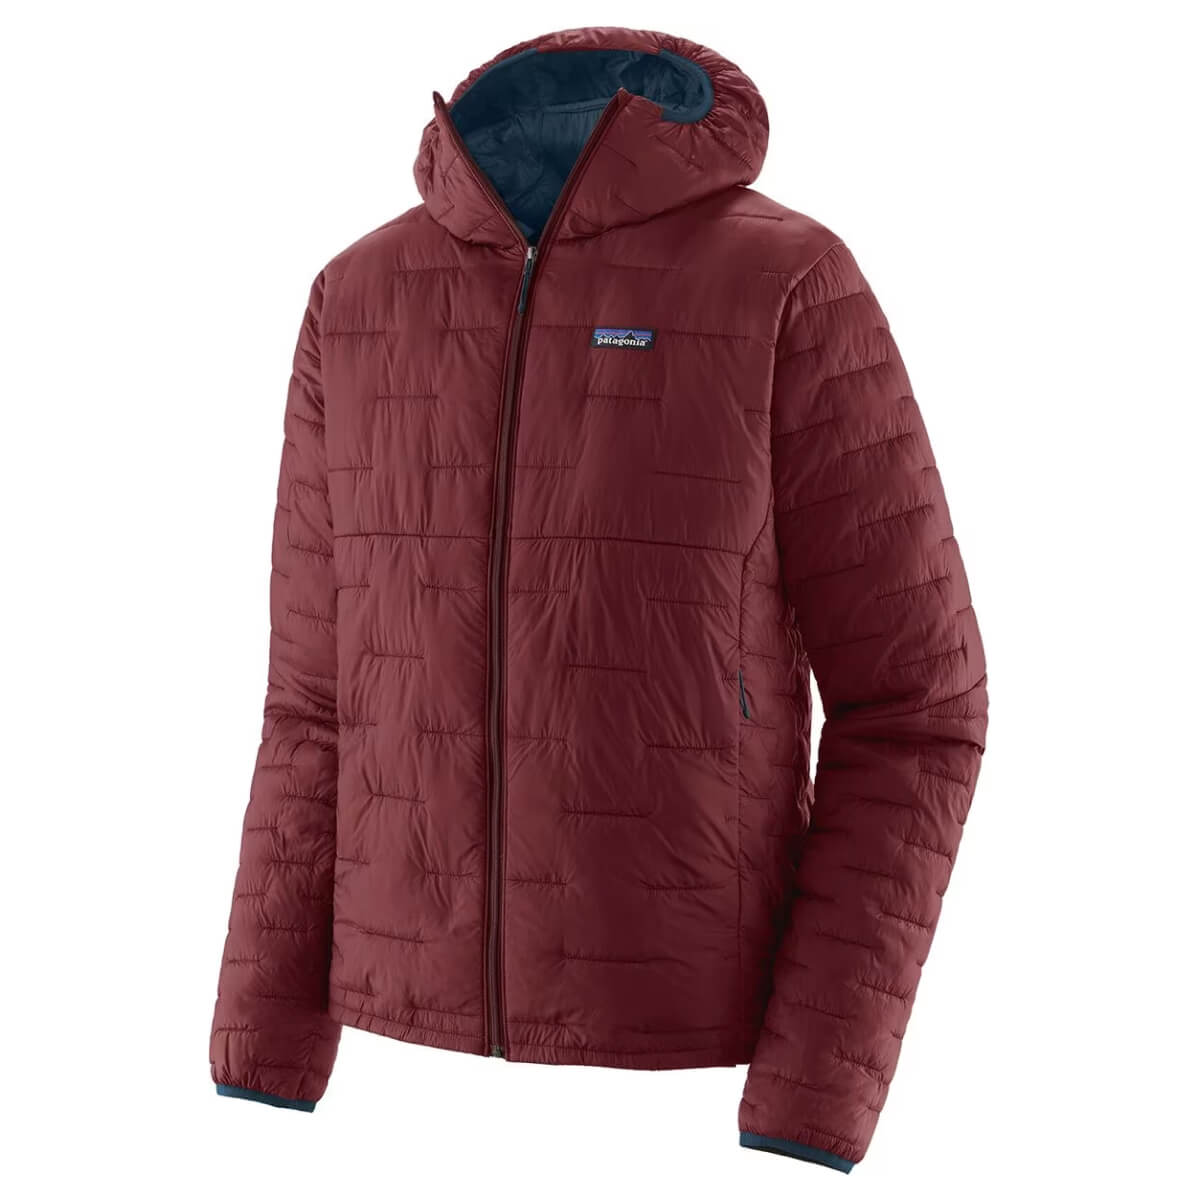 Patagonia Micro Puff lightweight puffy jacket